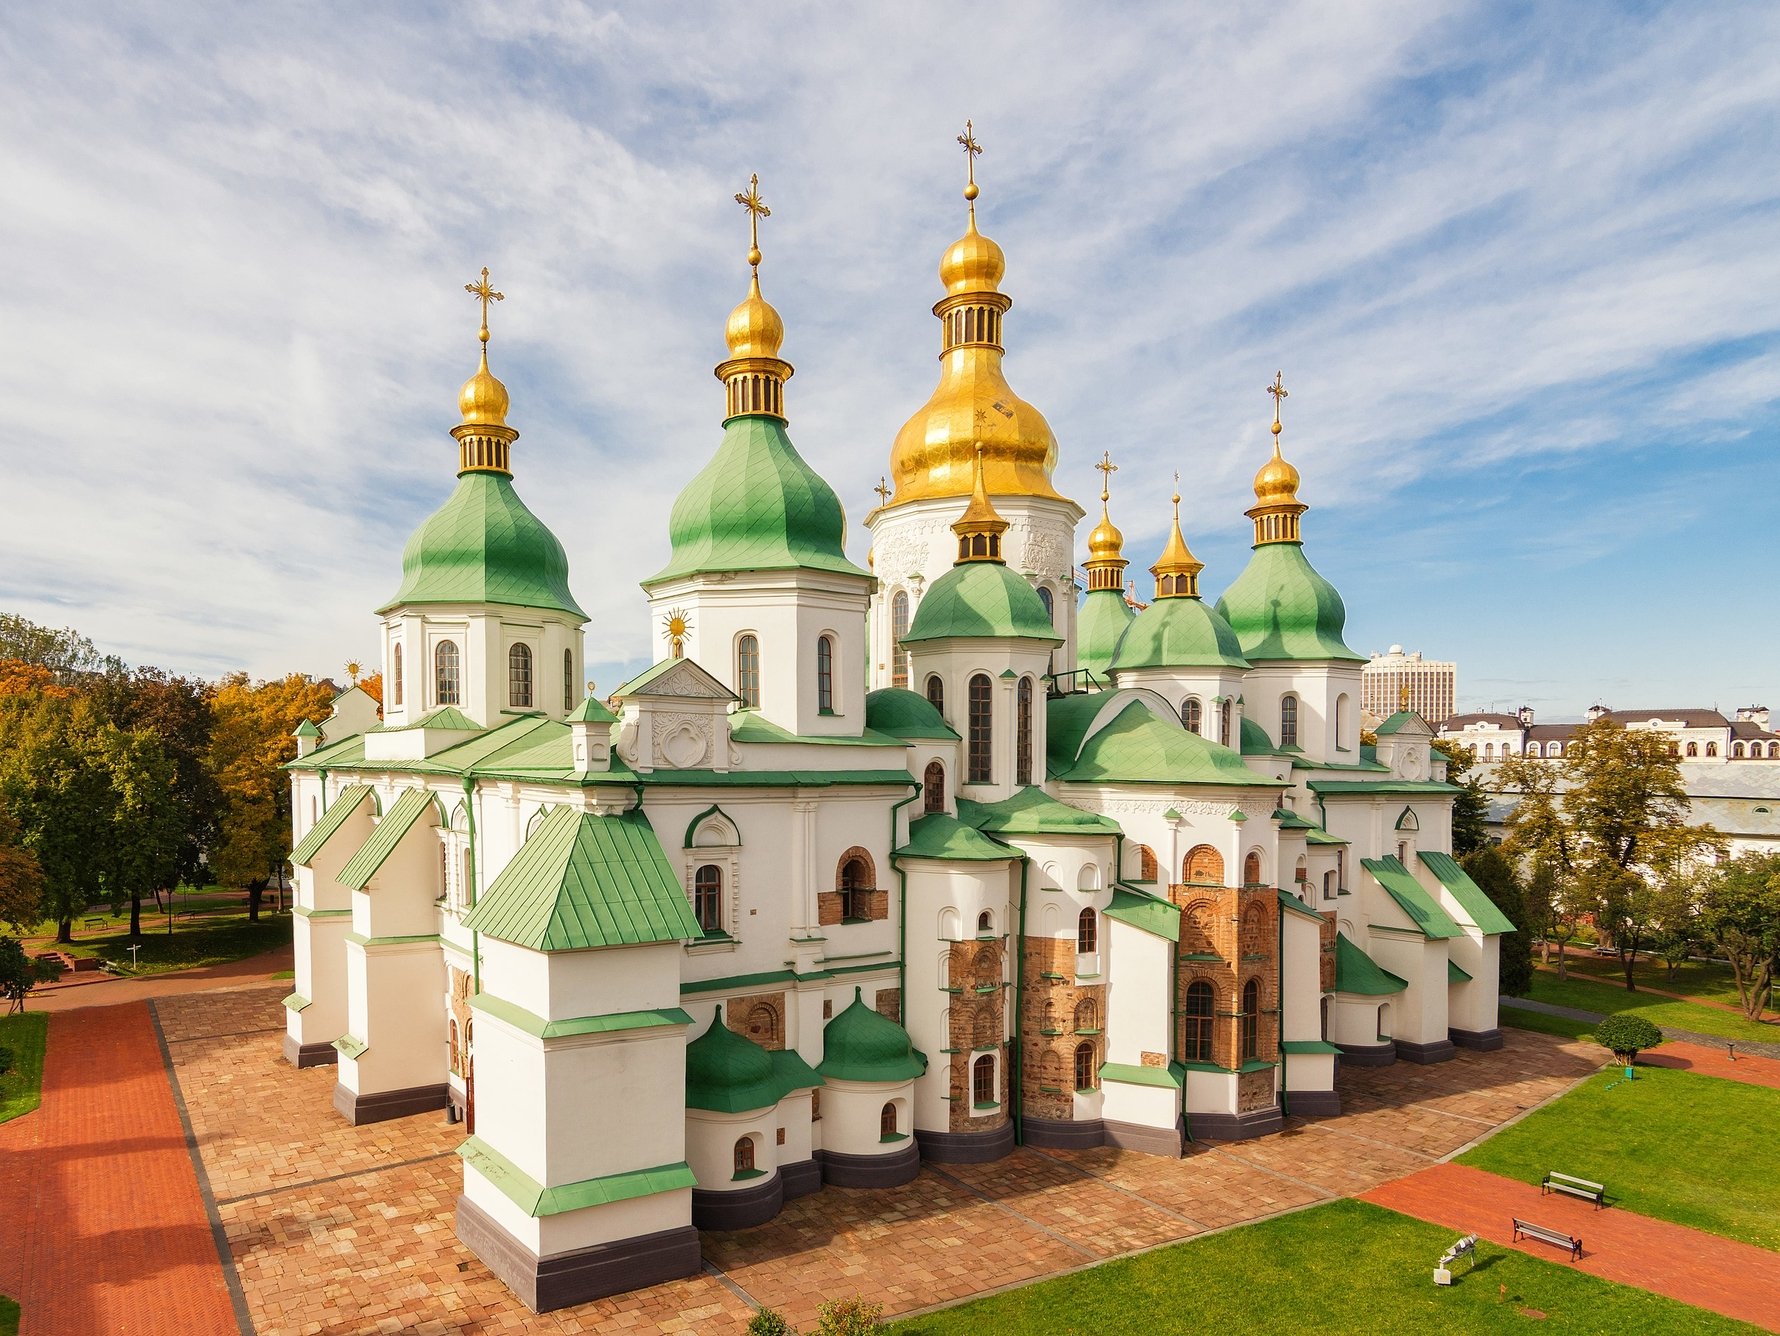 St Sophia's Cathedral in Kyiv © Rbrechko / CC 4.0